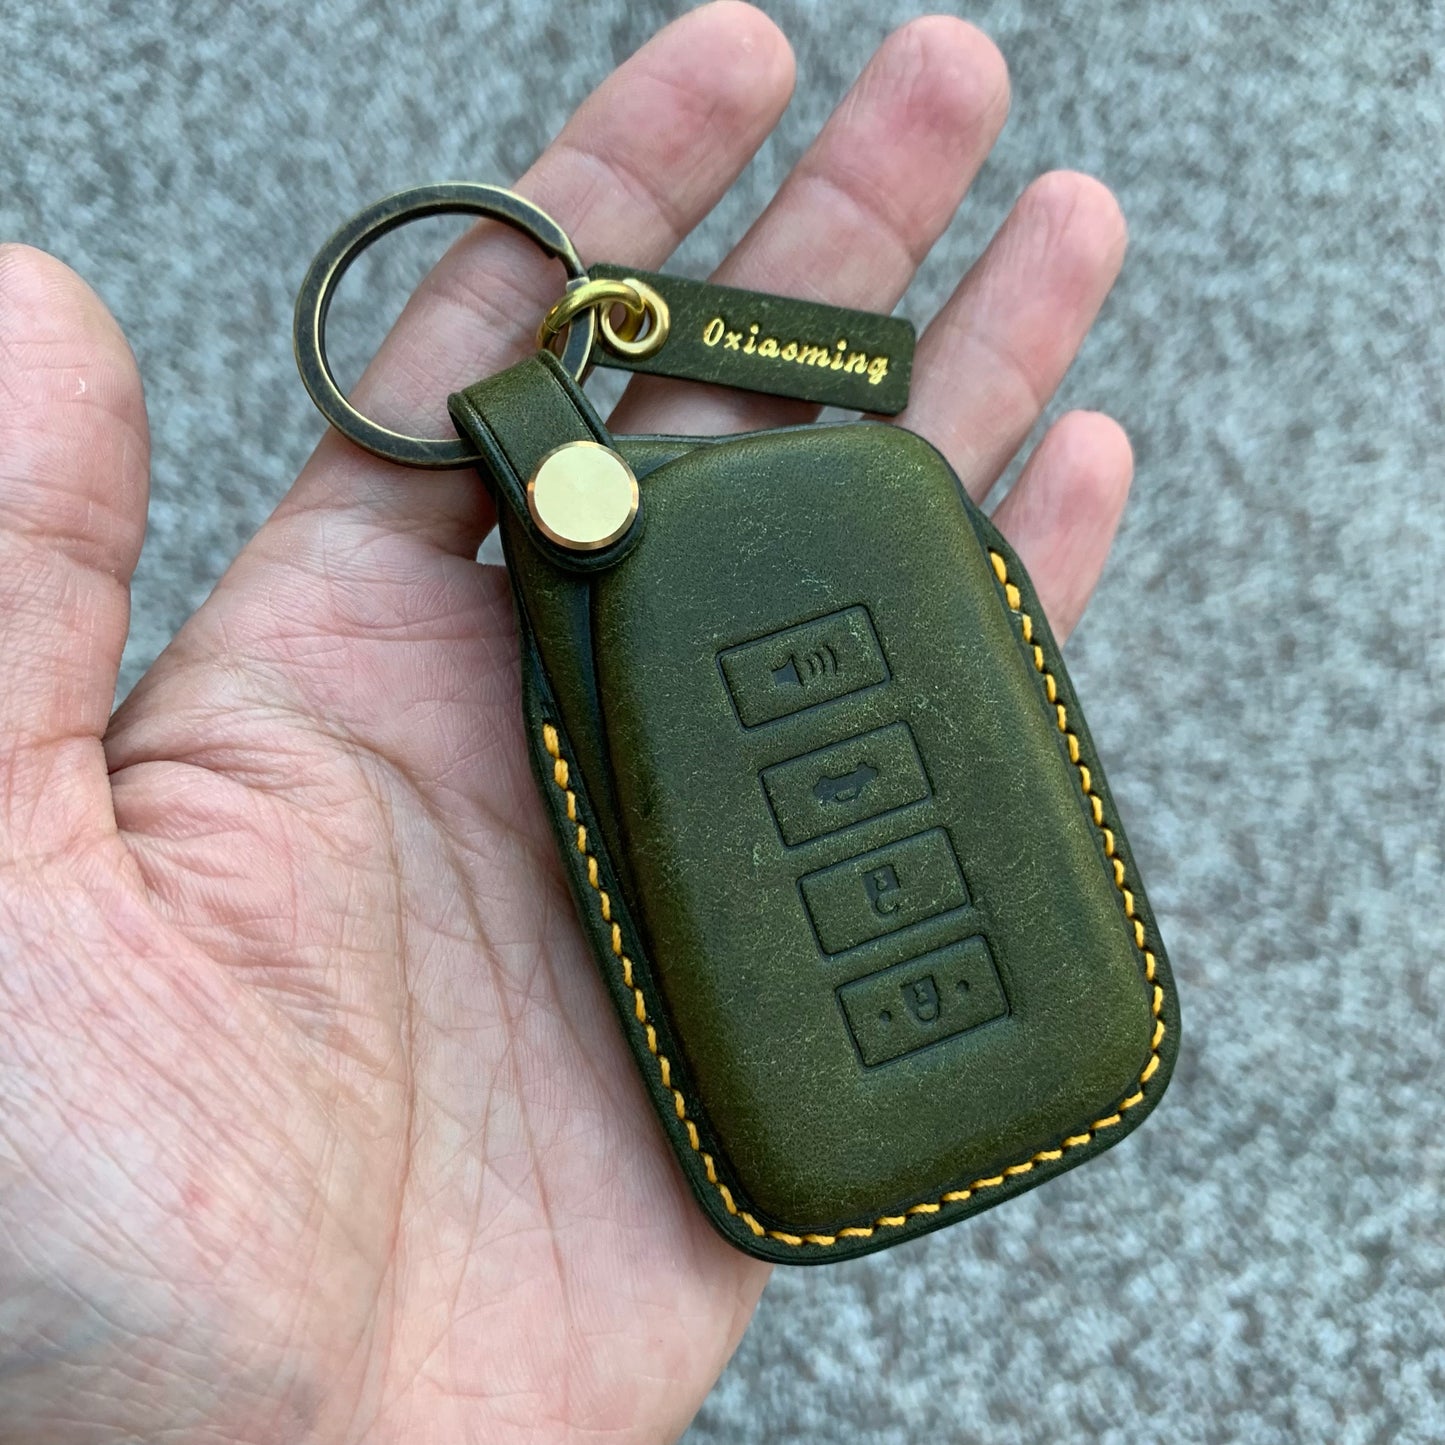 Lexus key fob cover, Pueblo leather